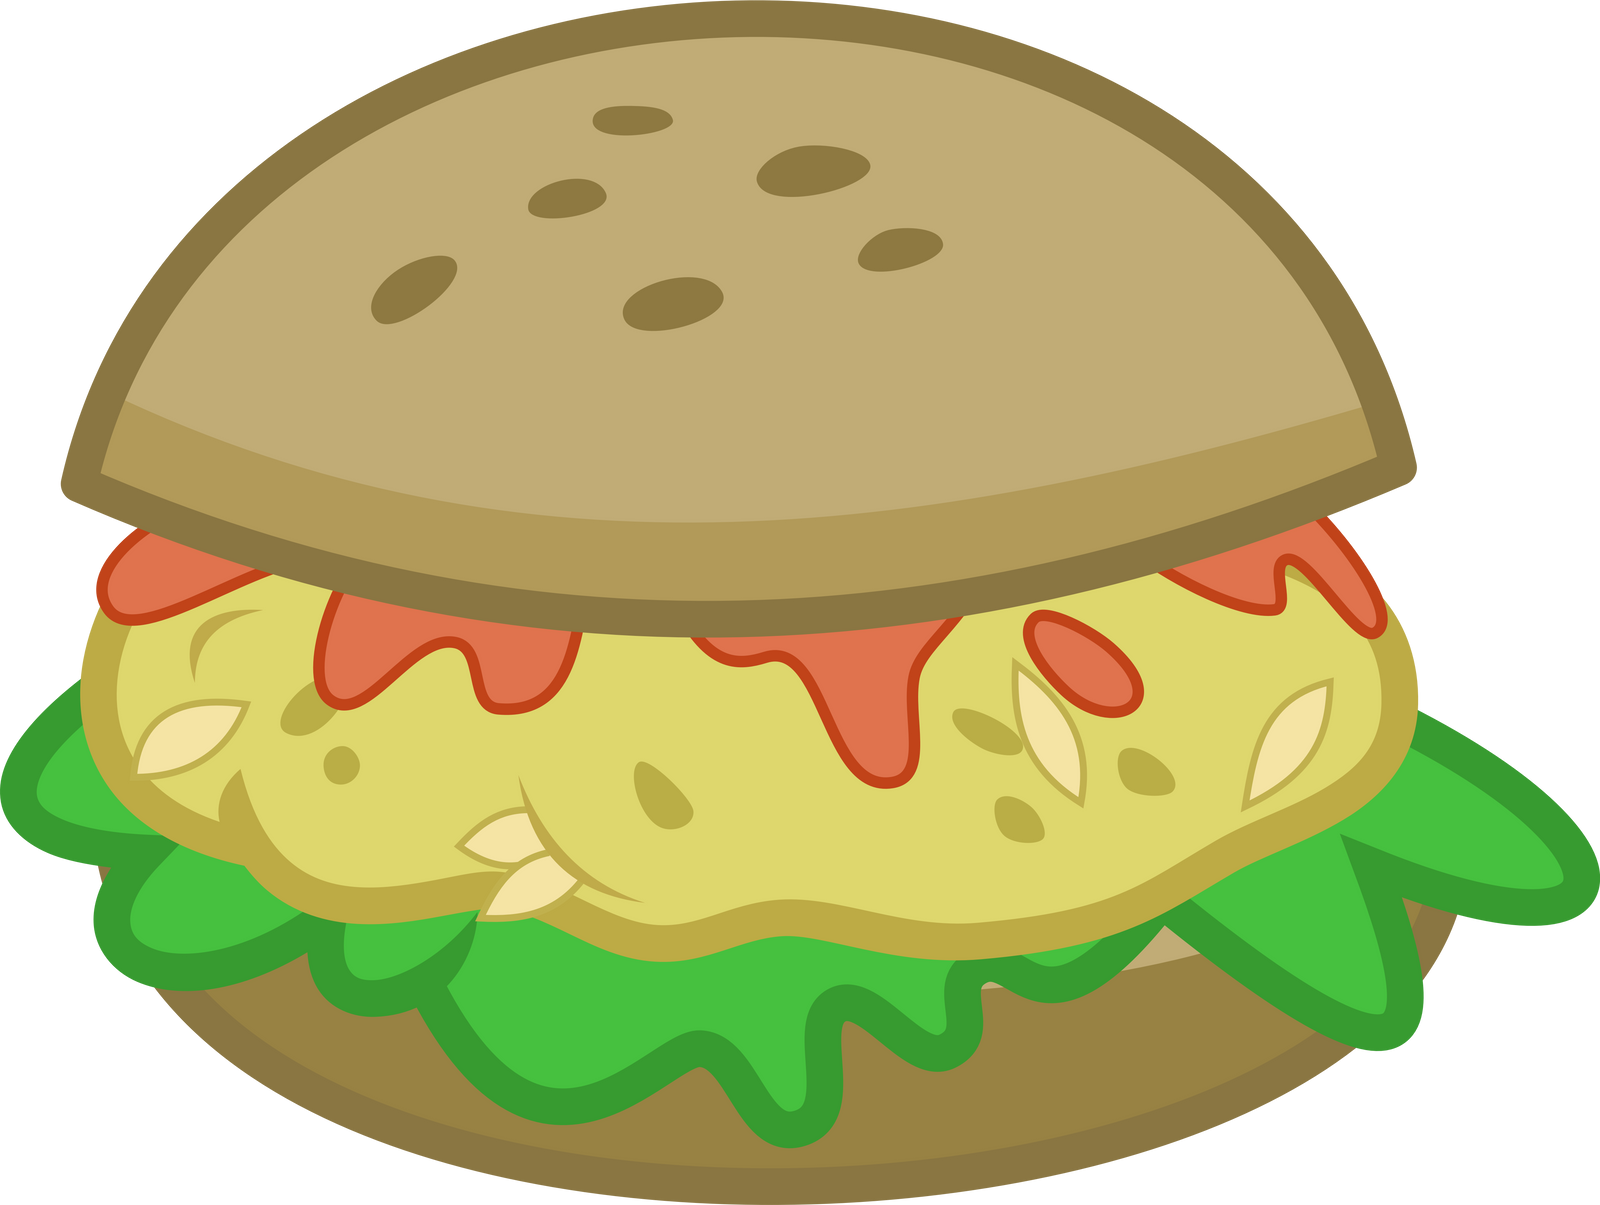 Oatburger